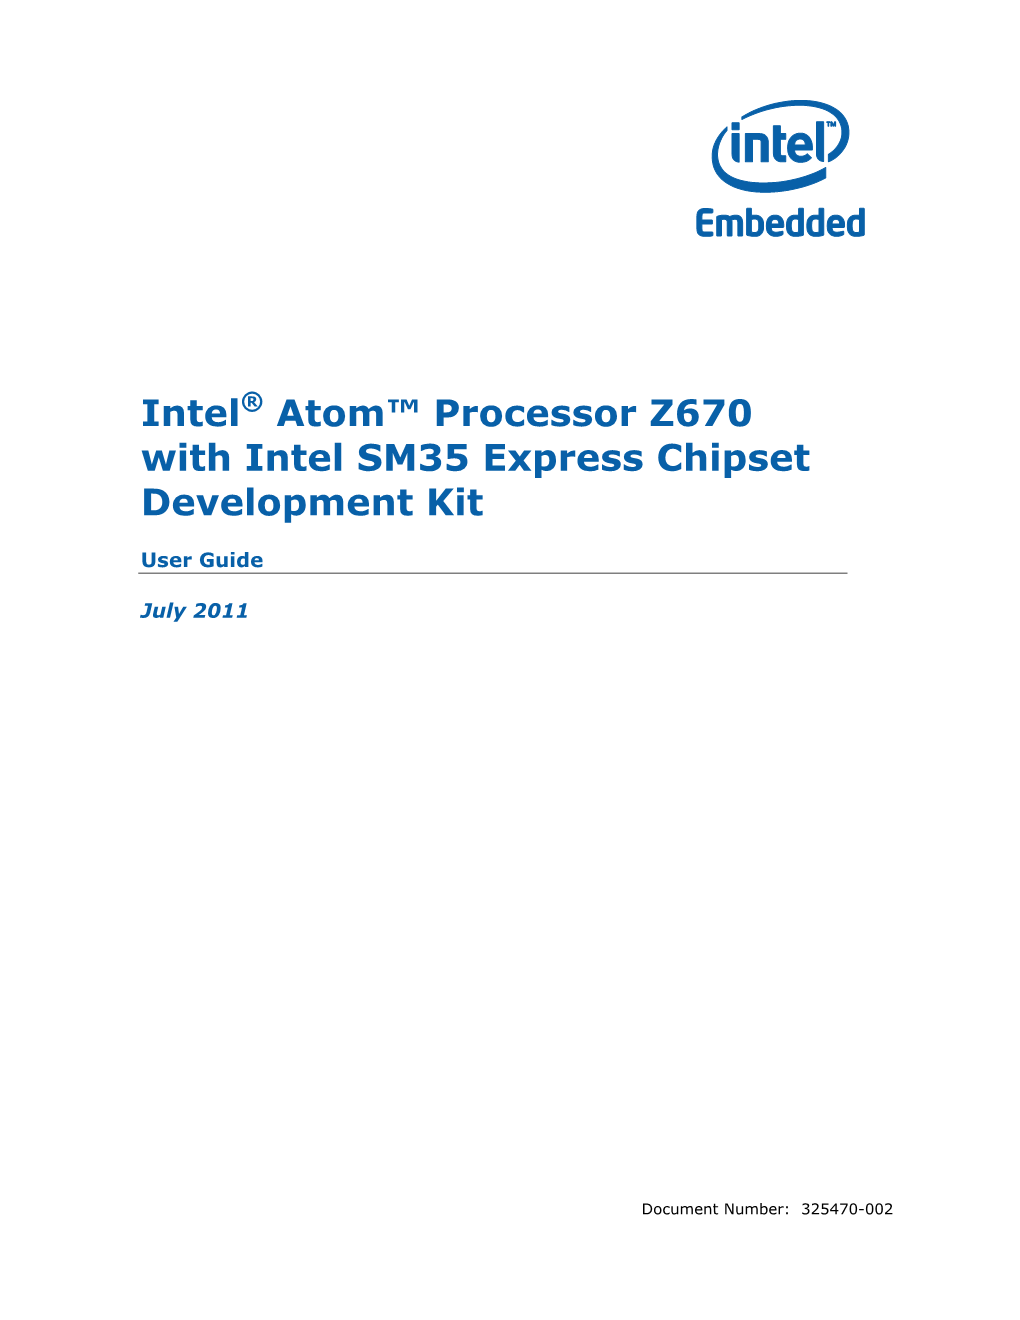 Intel Atom Processor Z670 with Intel SM35 Express Chipset Development Kit